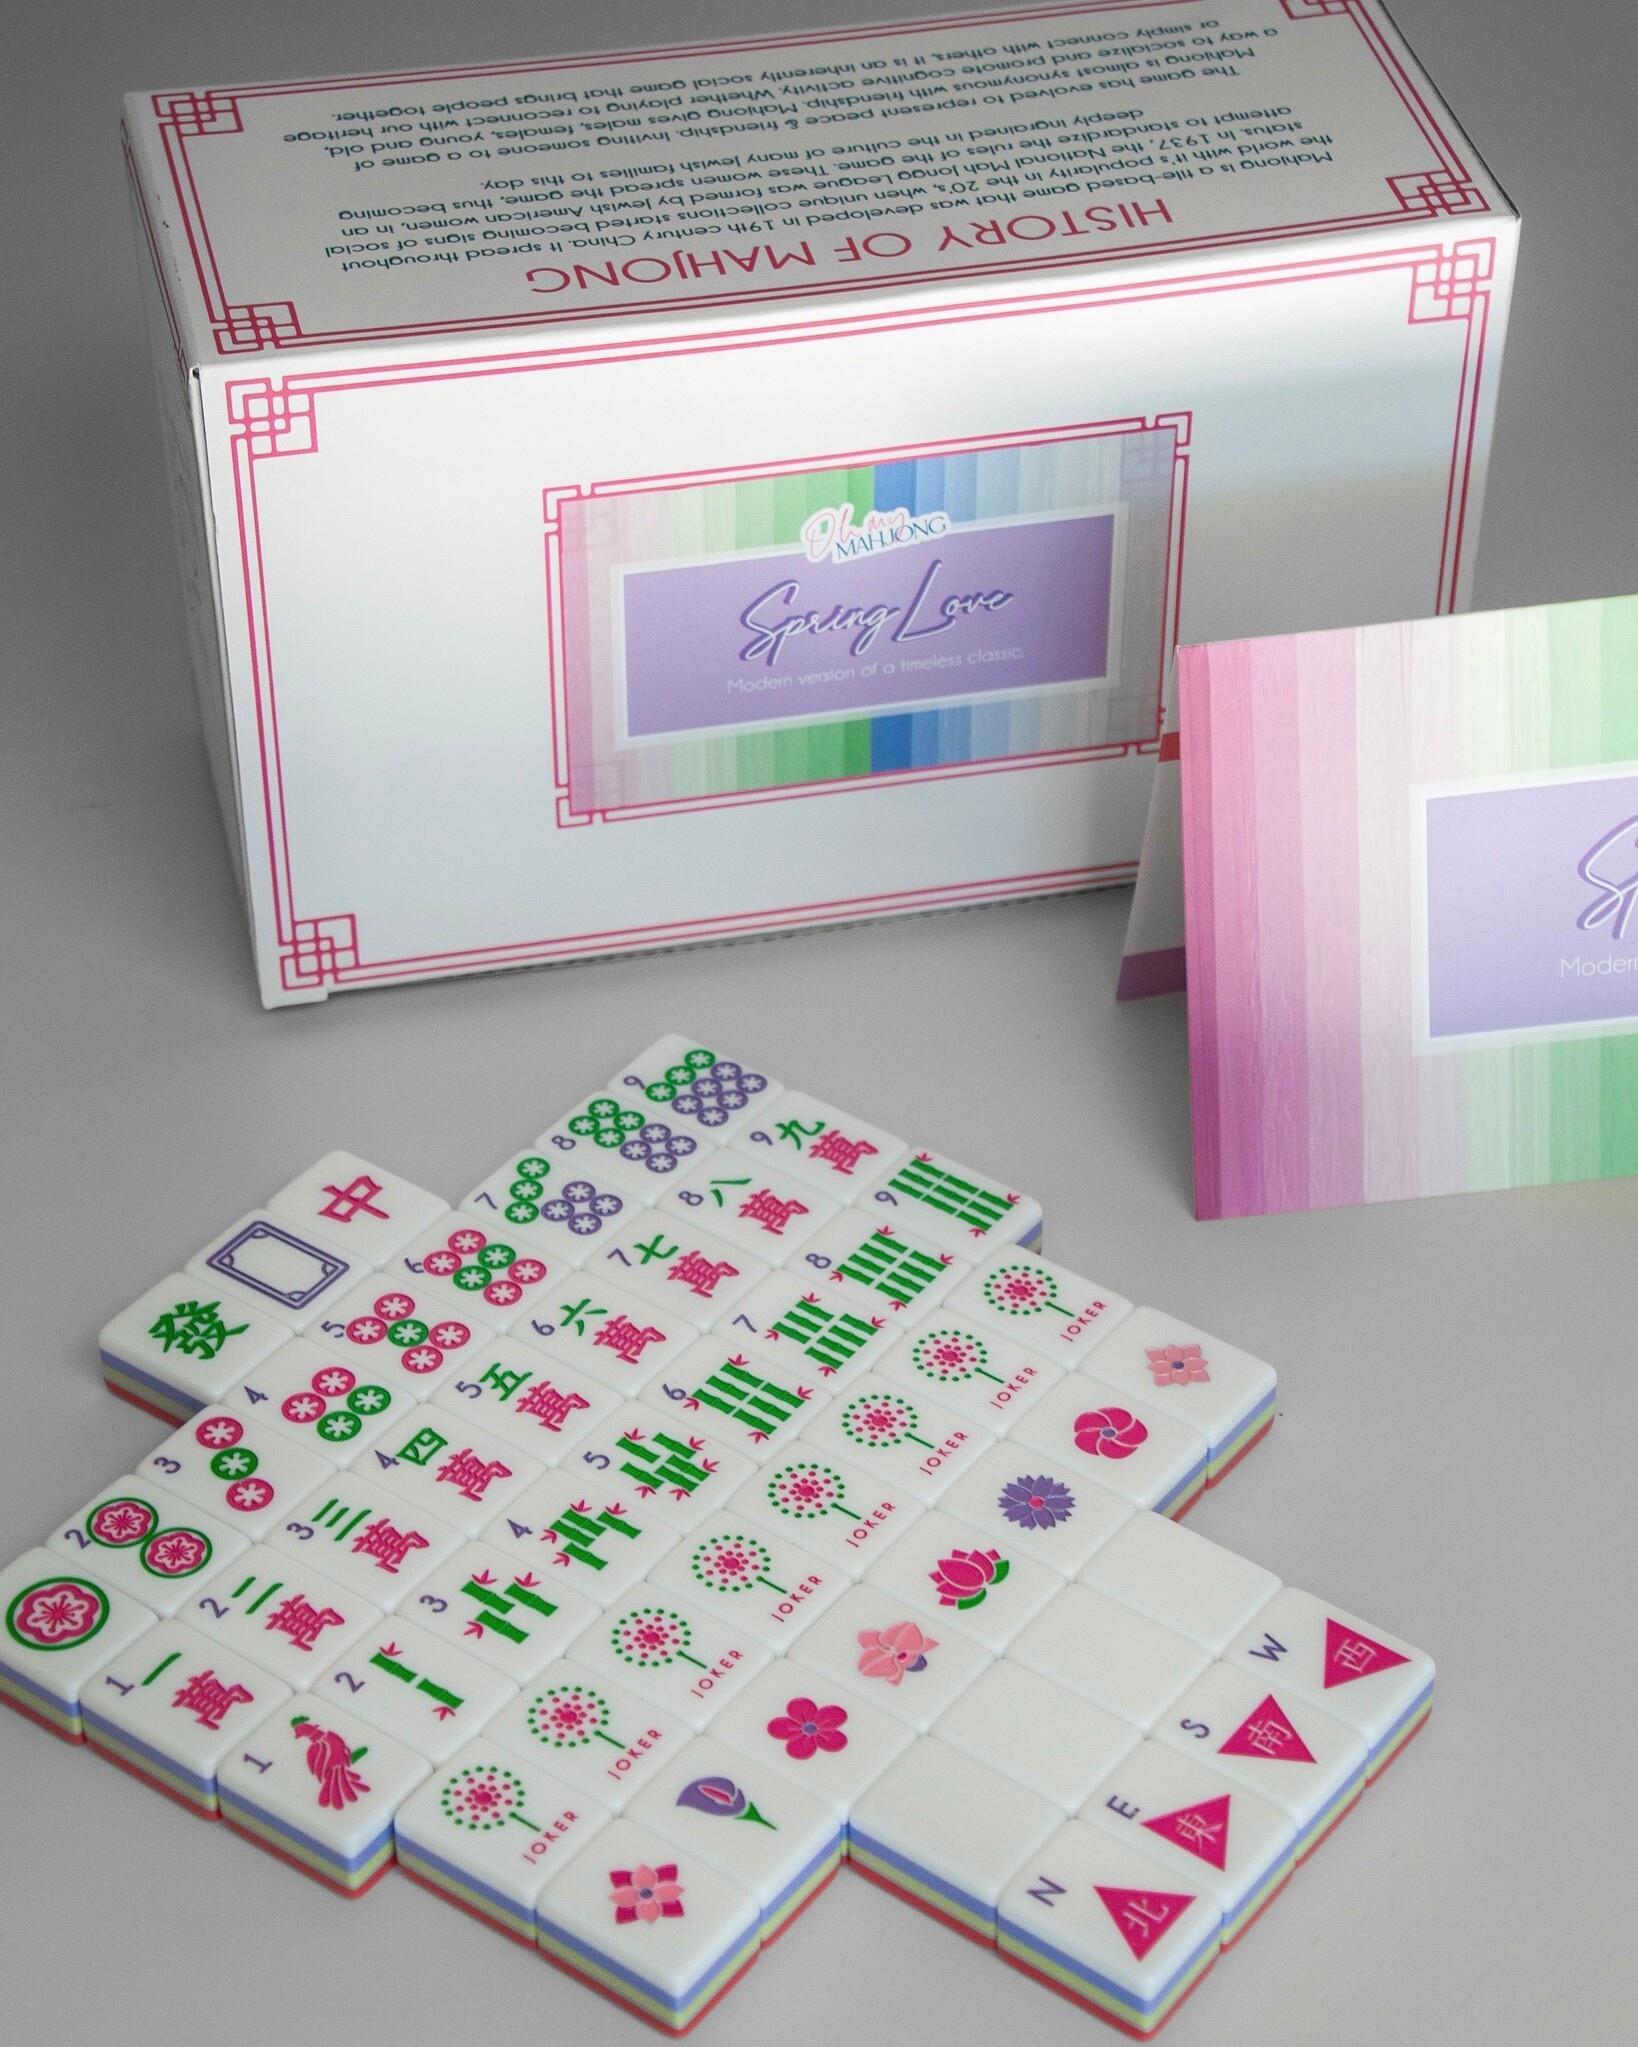 new to mahjong pls help : r/Mahjong